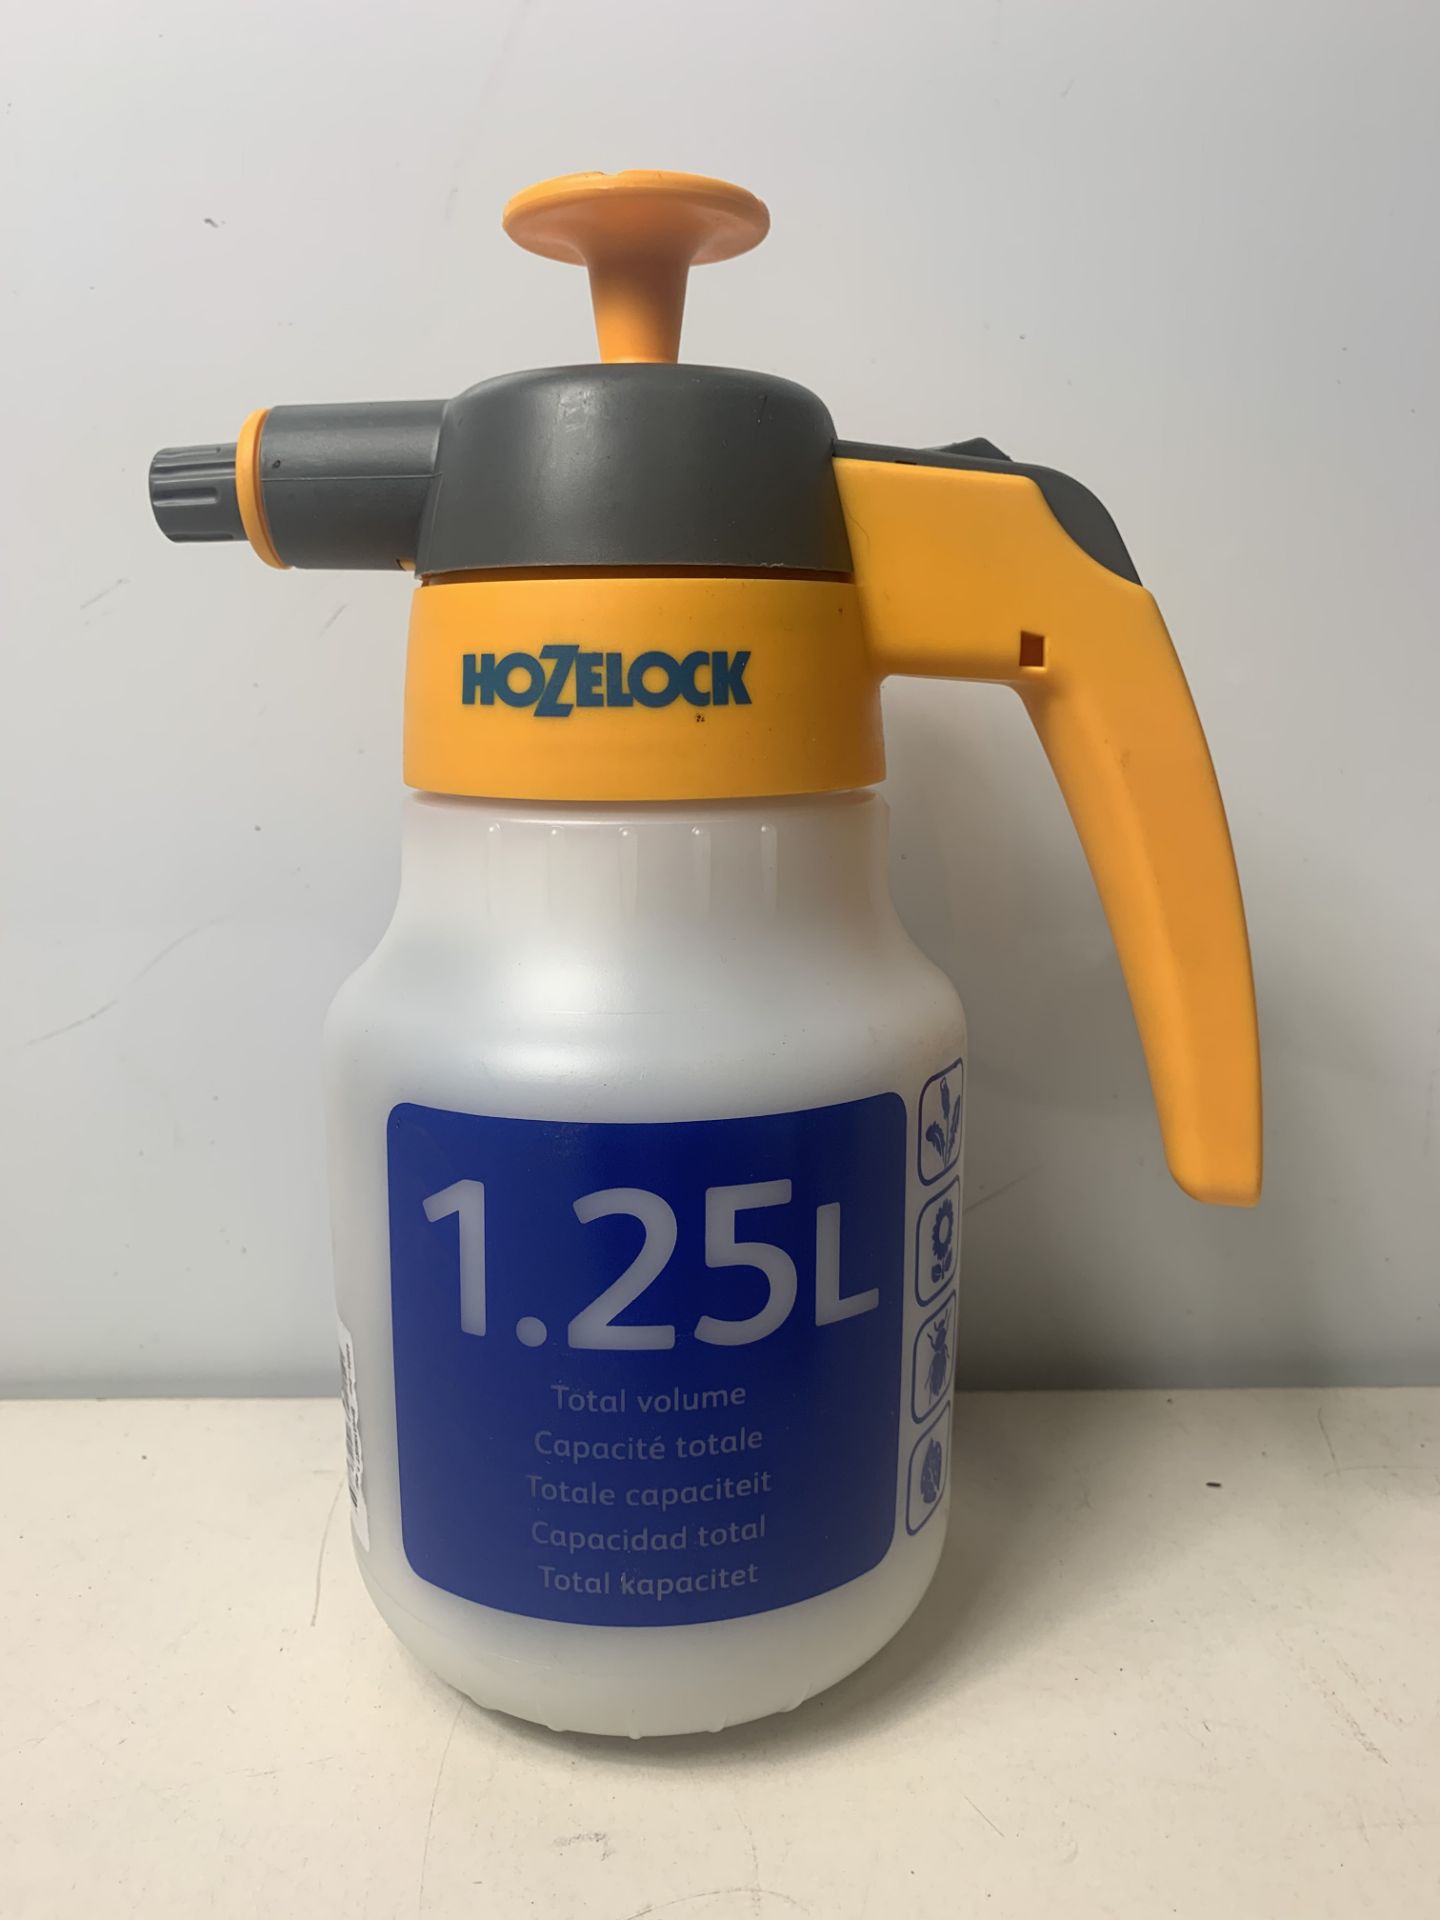 6x HOZELOCK Pressure Sprayer 1.25l - Image 2 of 3